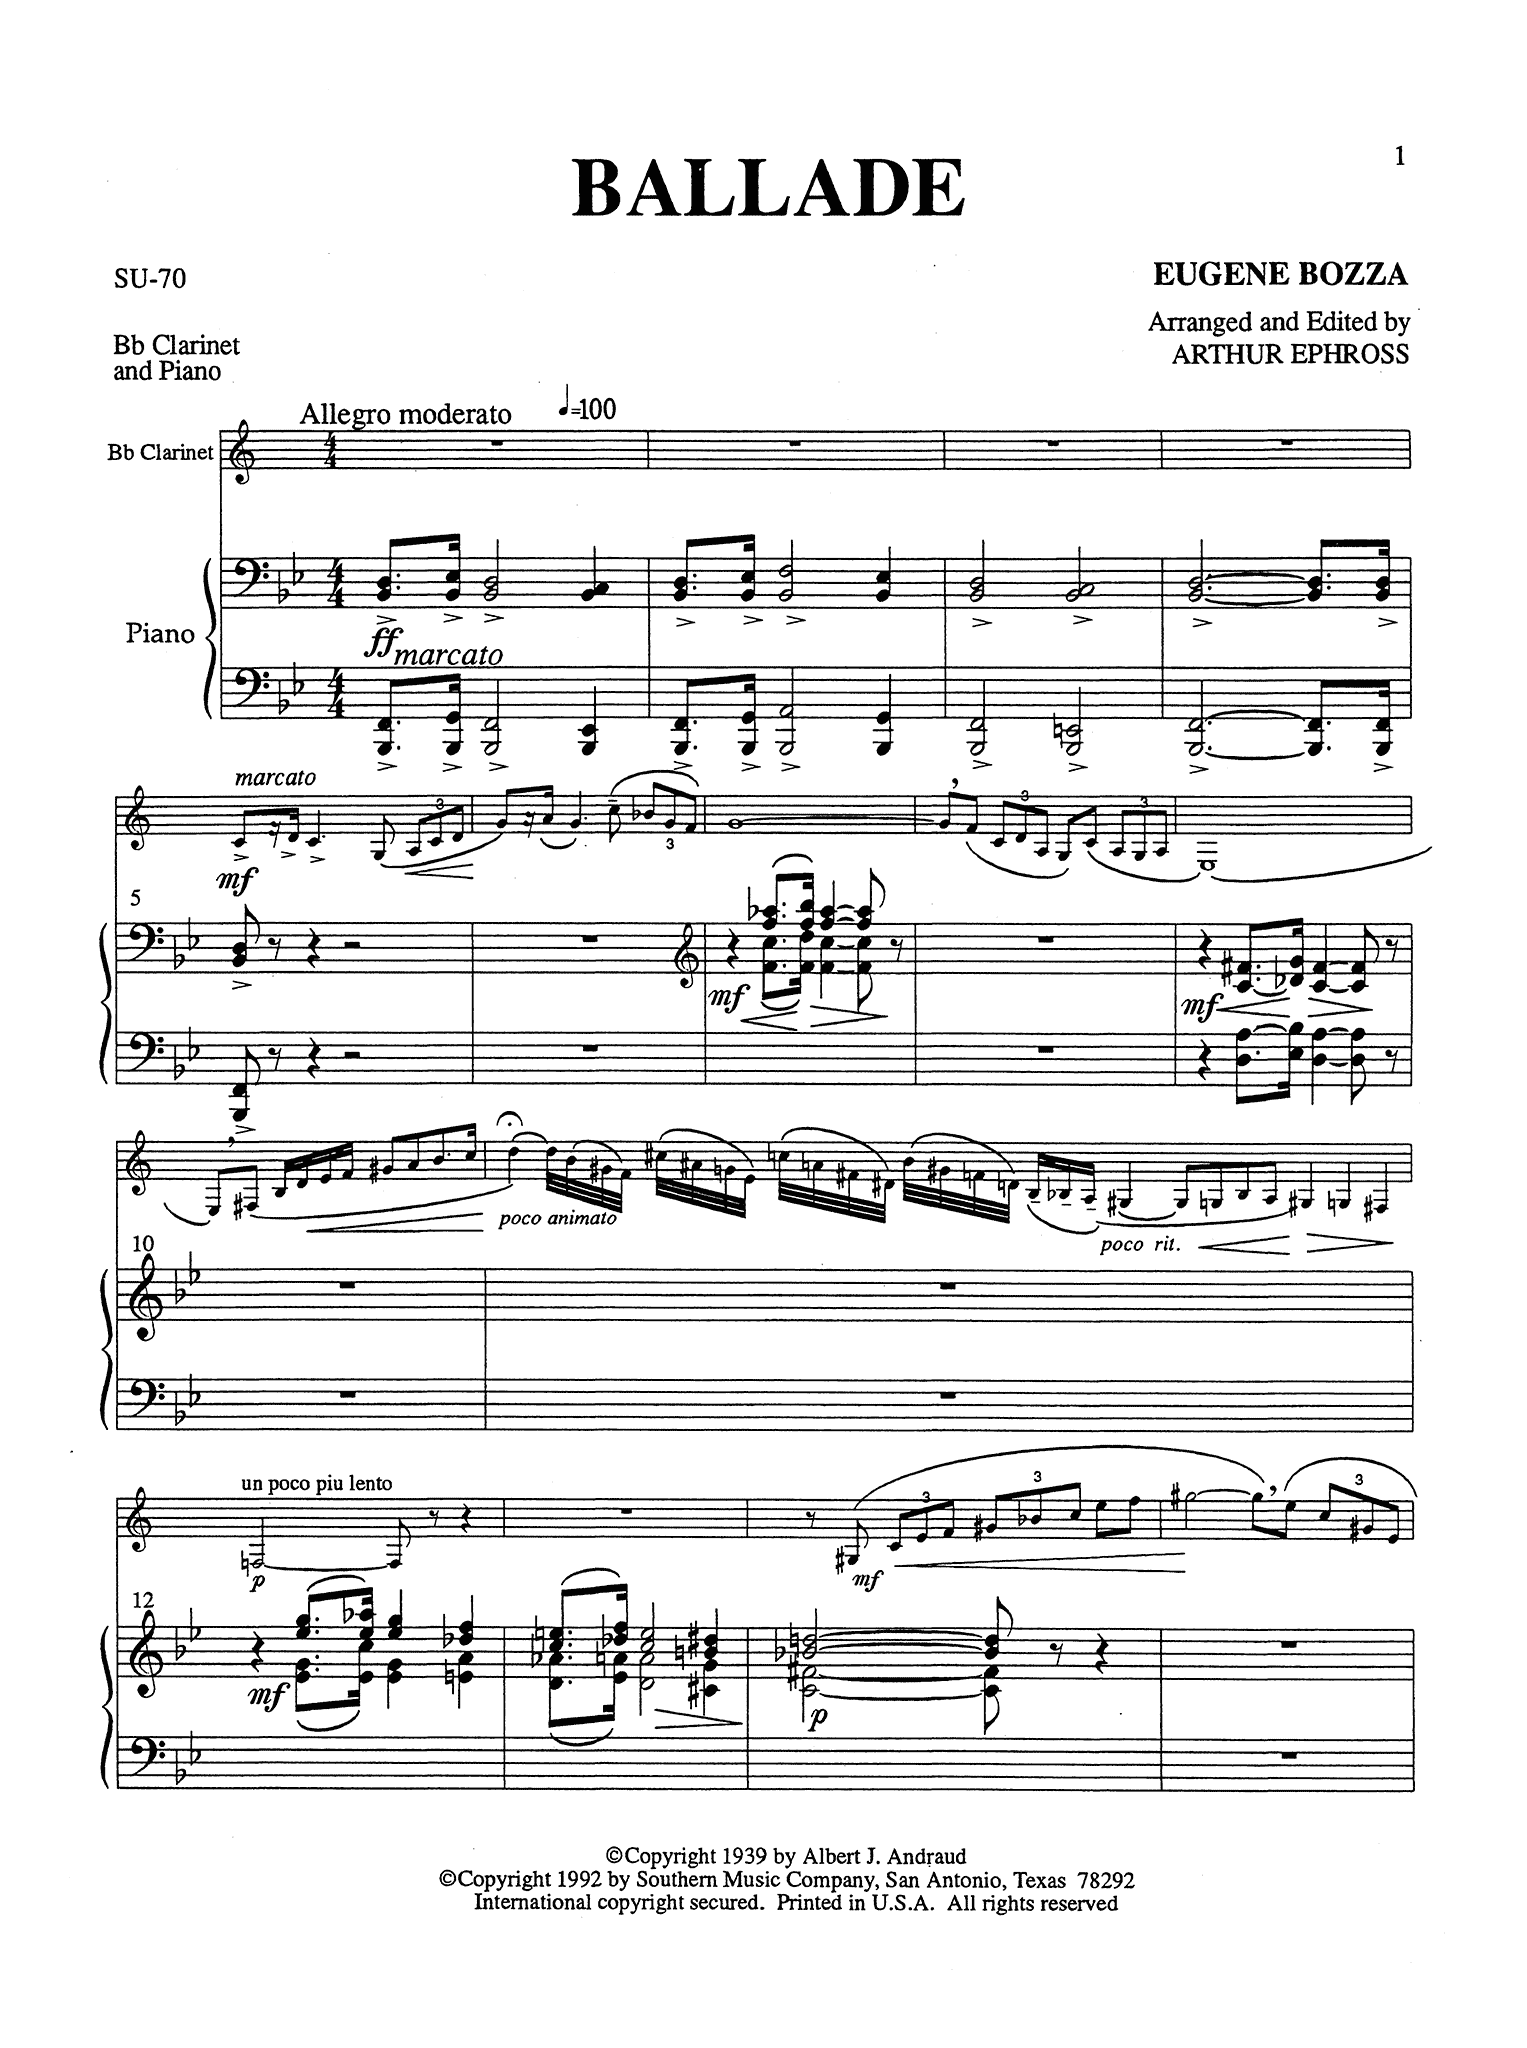 Bozza Ballade b-flat clarinet and piano arrangement score